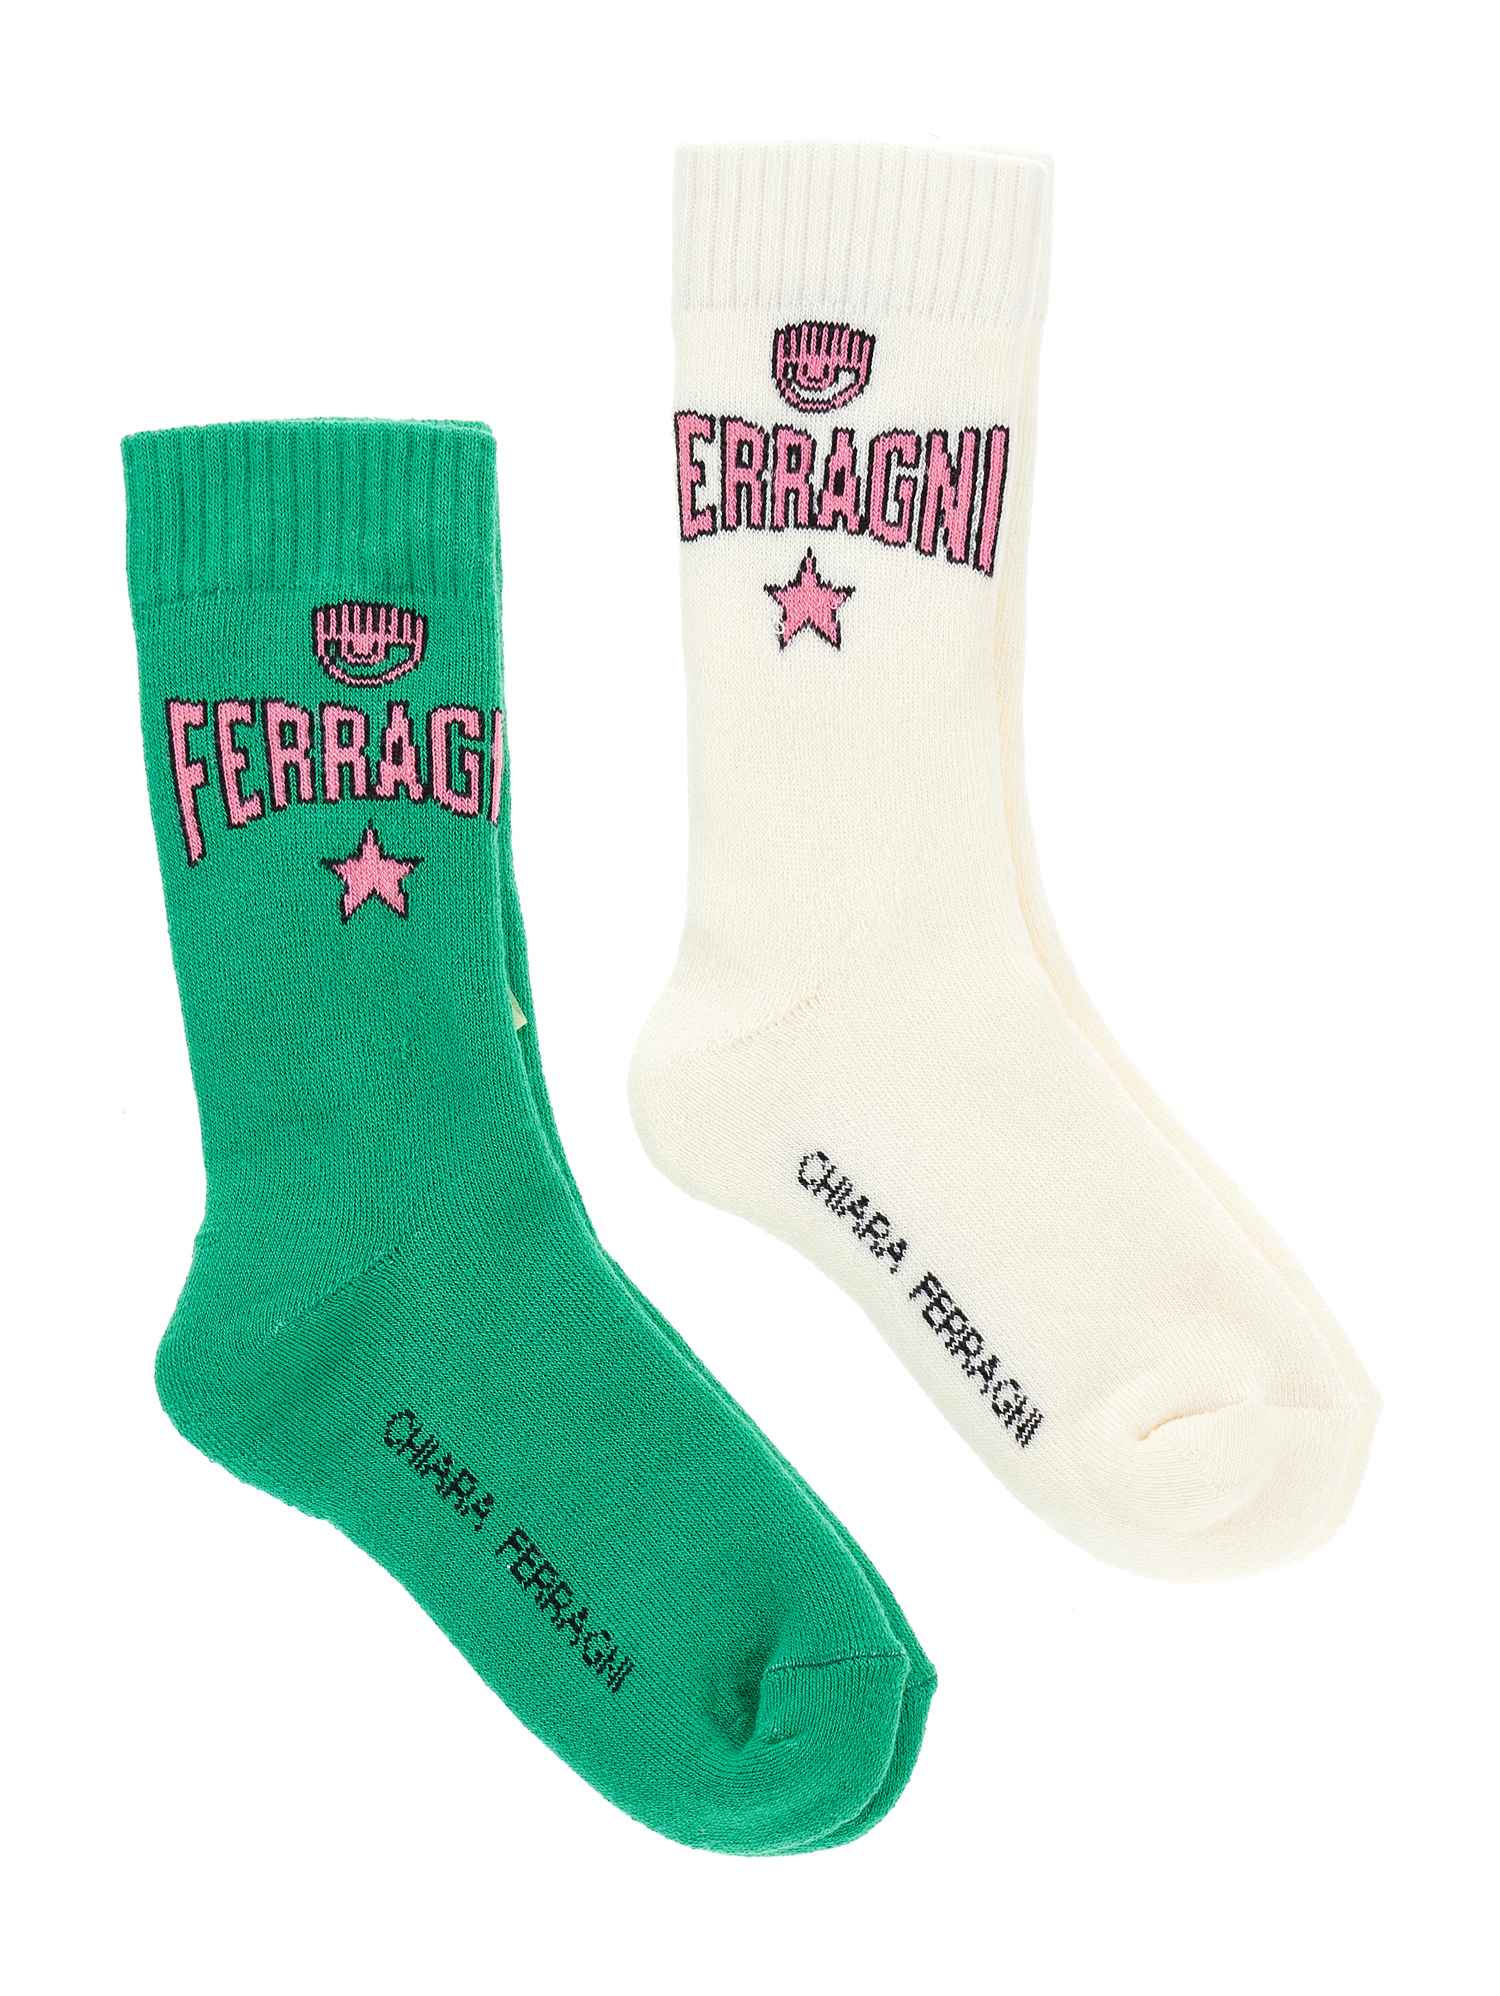 Shop Chiara Ferragni Cf Ferragni Stretch Socks Set In Bright Green + Gardenia